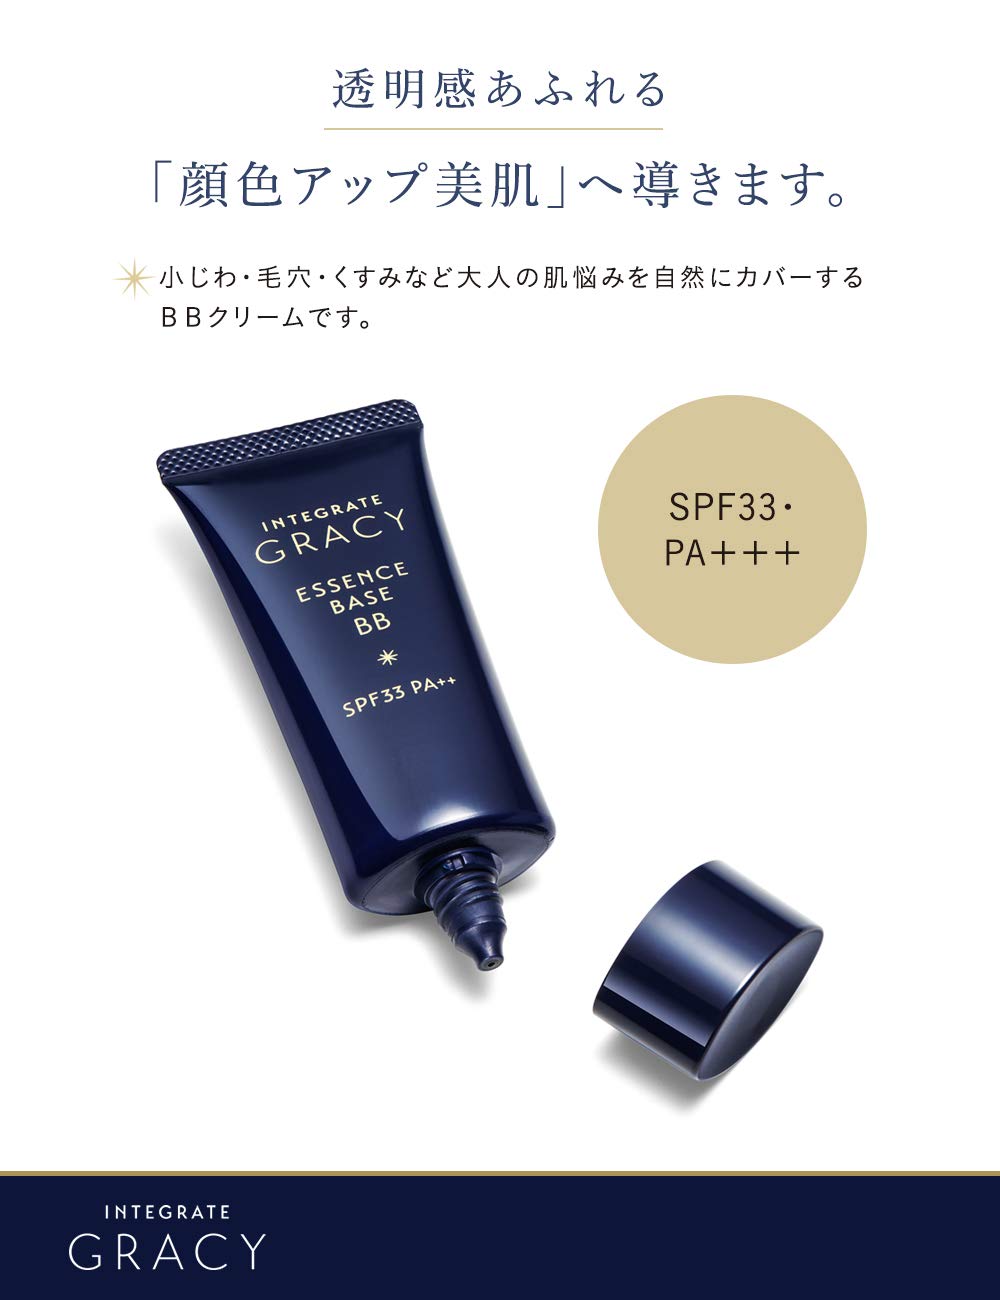 [A] Shiseido integrate Gracy Essence Base BB 2 40g SPF33 PA+